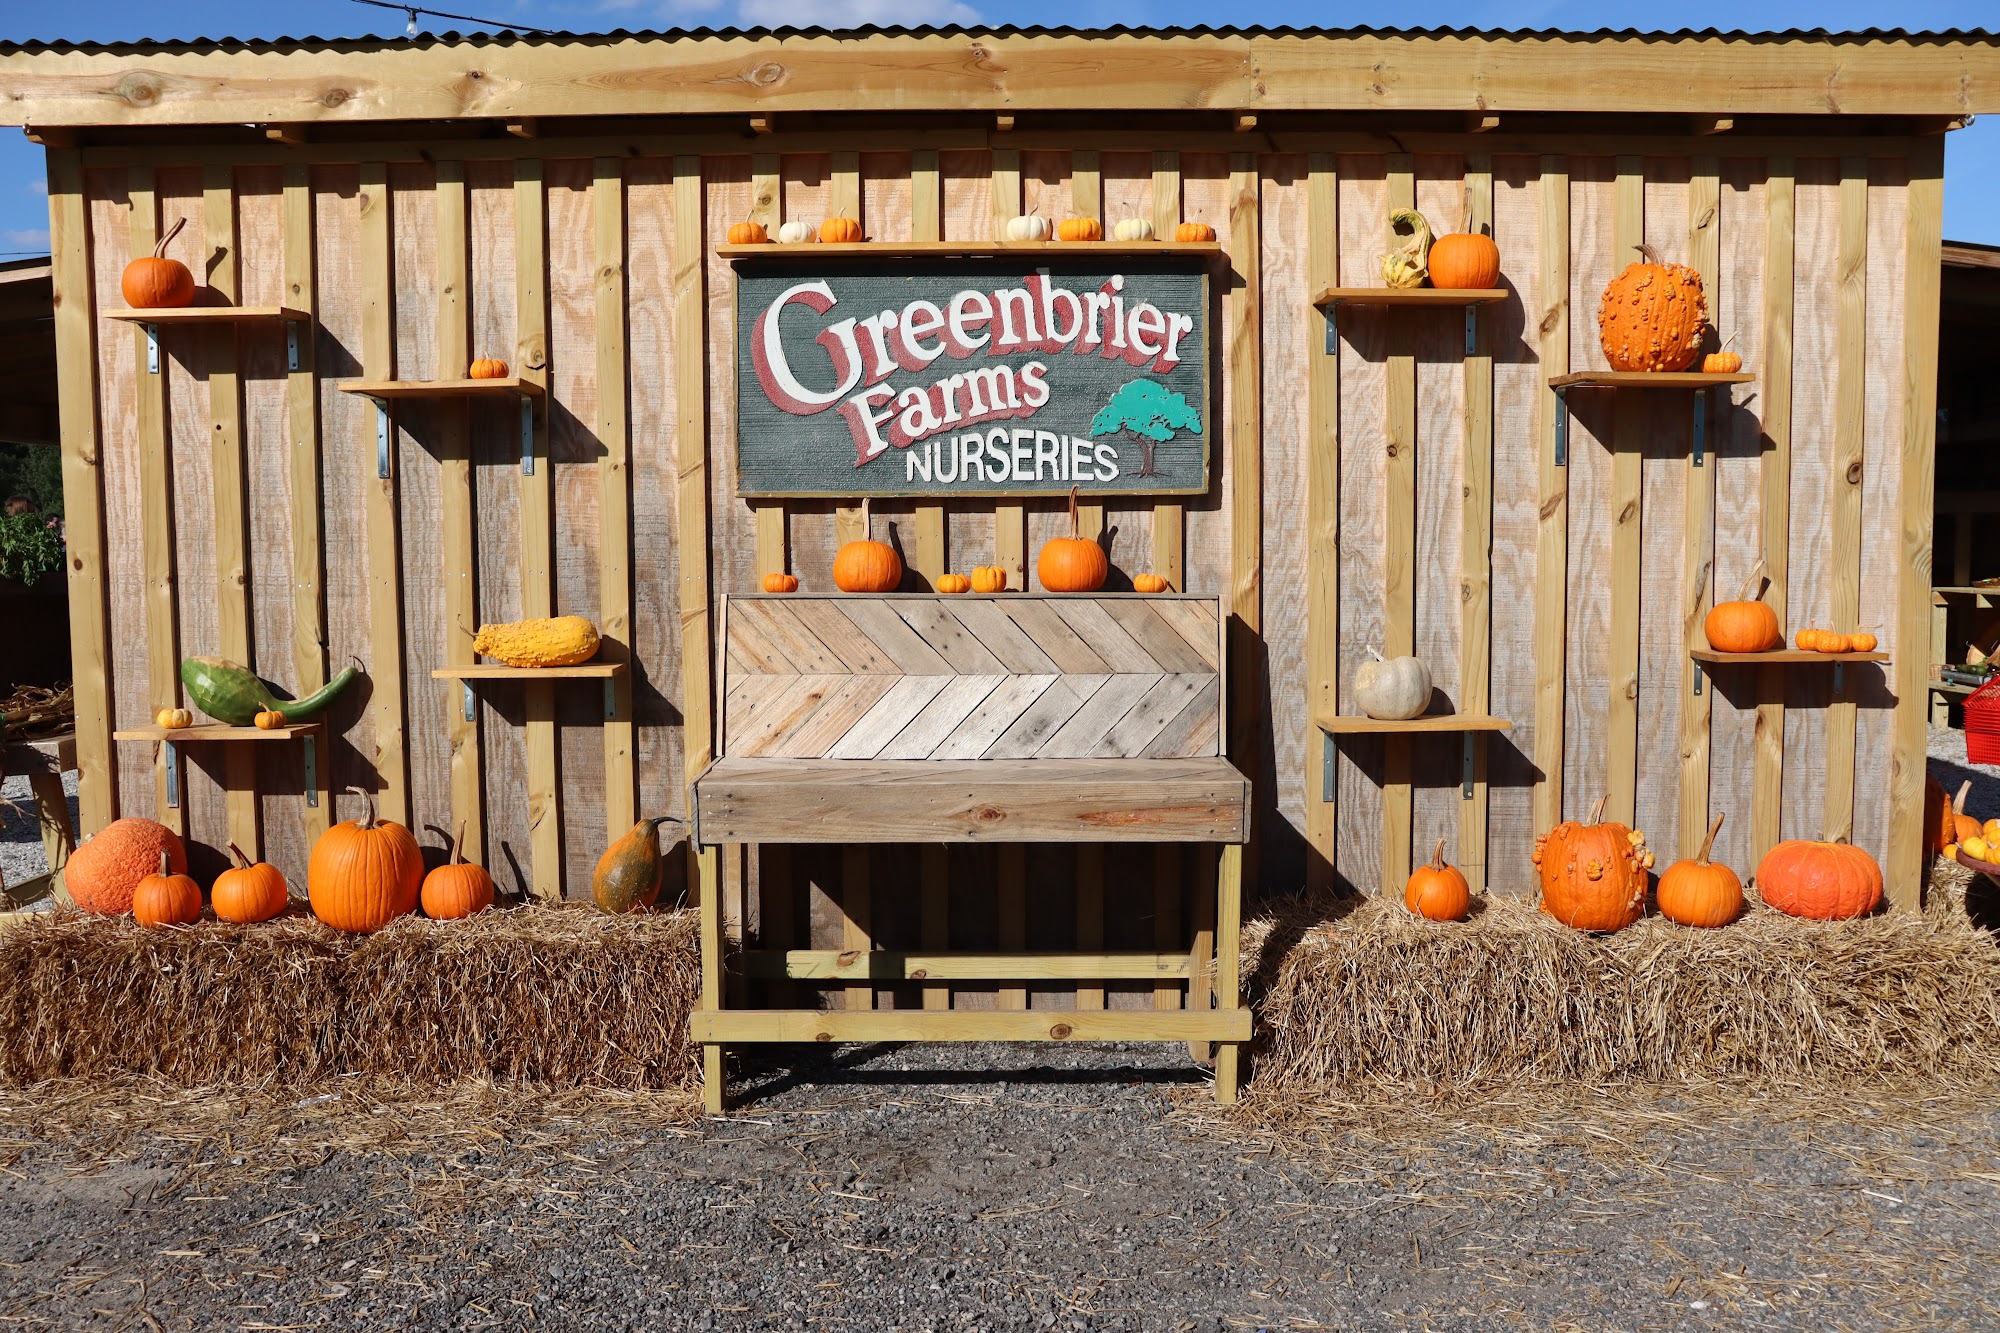 Historic Greenbrier Farms